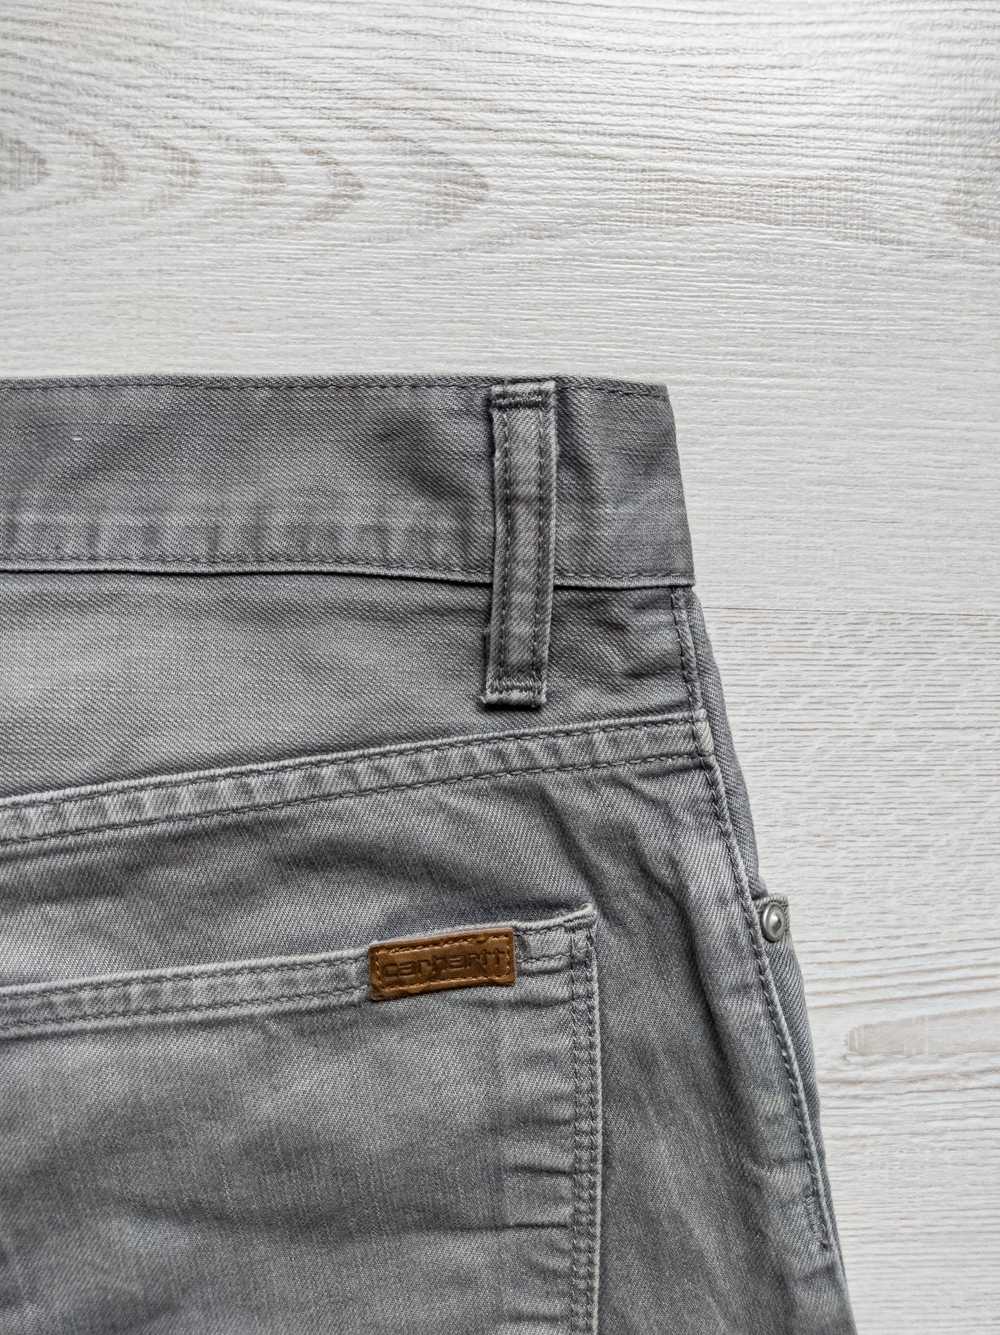 Carhartt × Vintage Carhartt Men's Jeans - image 5